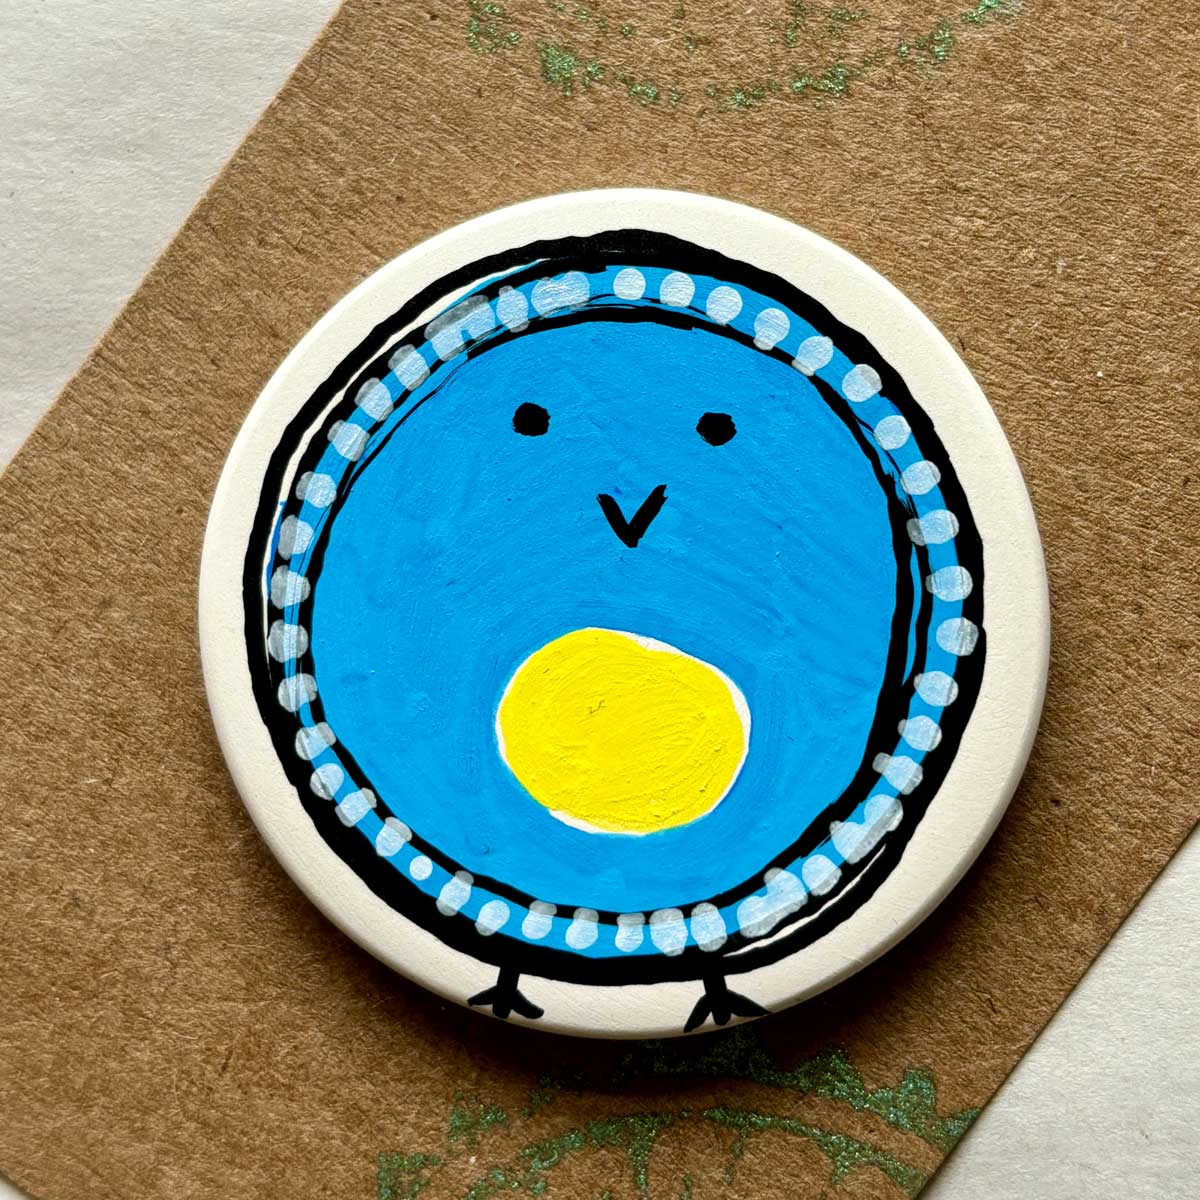 circular ceramic brooch with a hand painted blue tit blob bird illustration